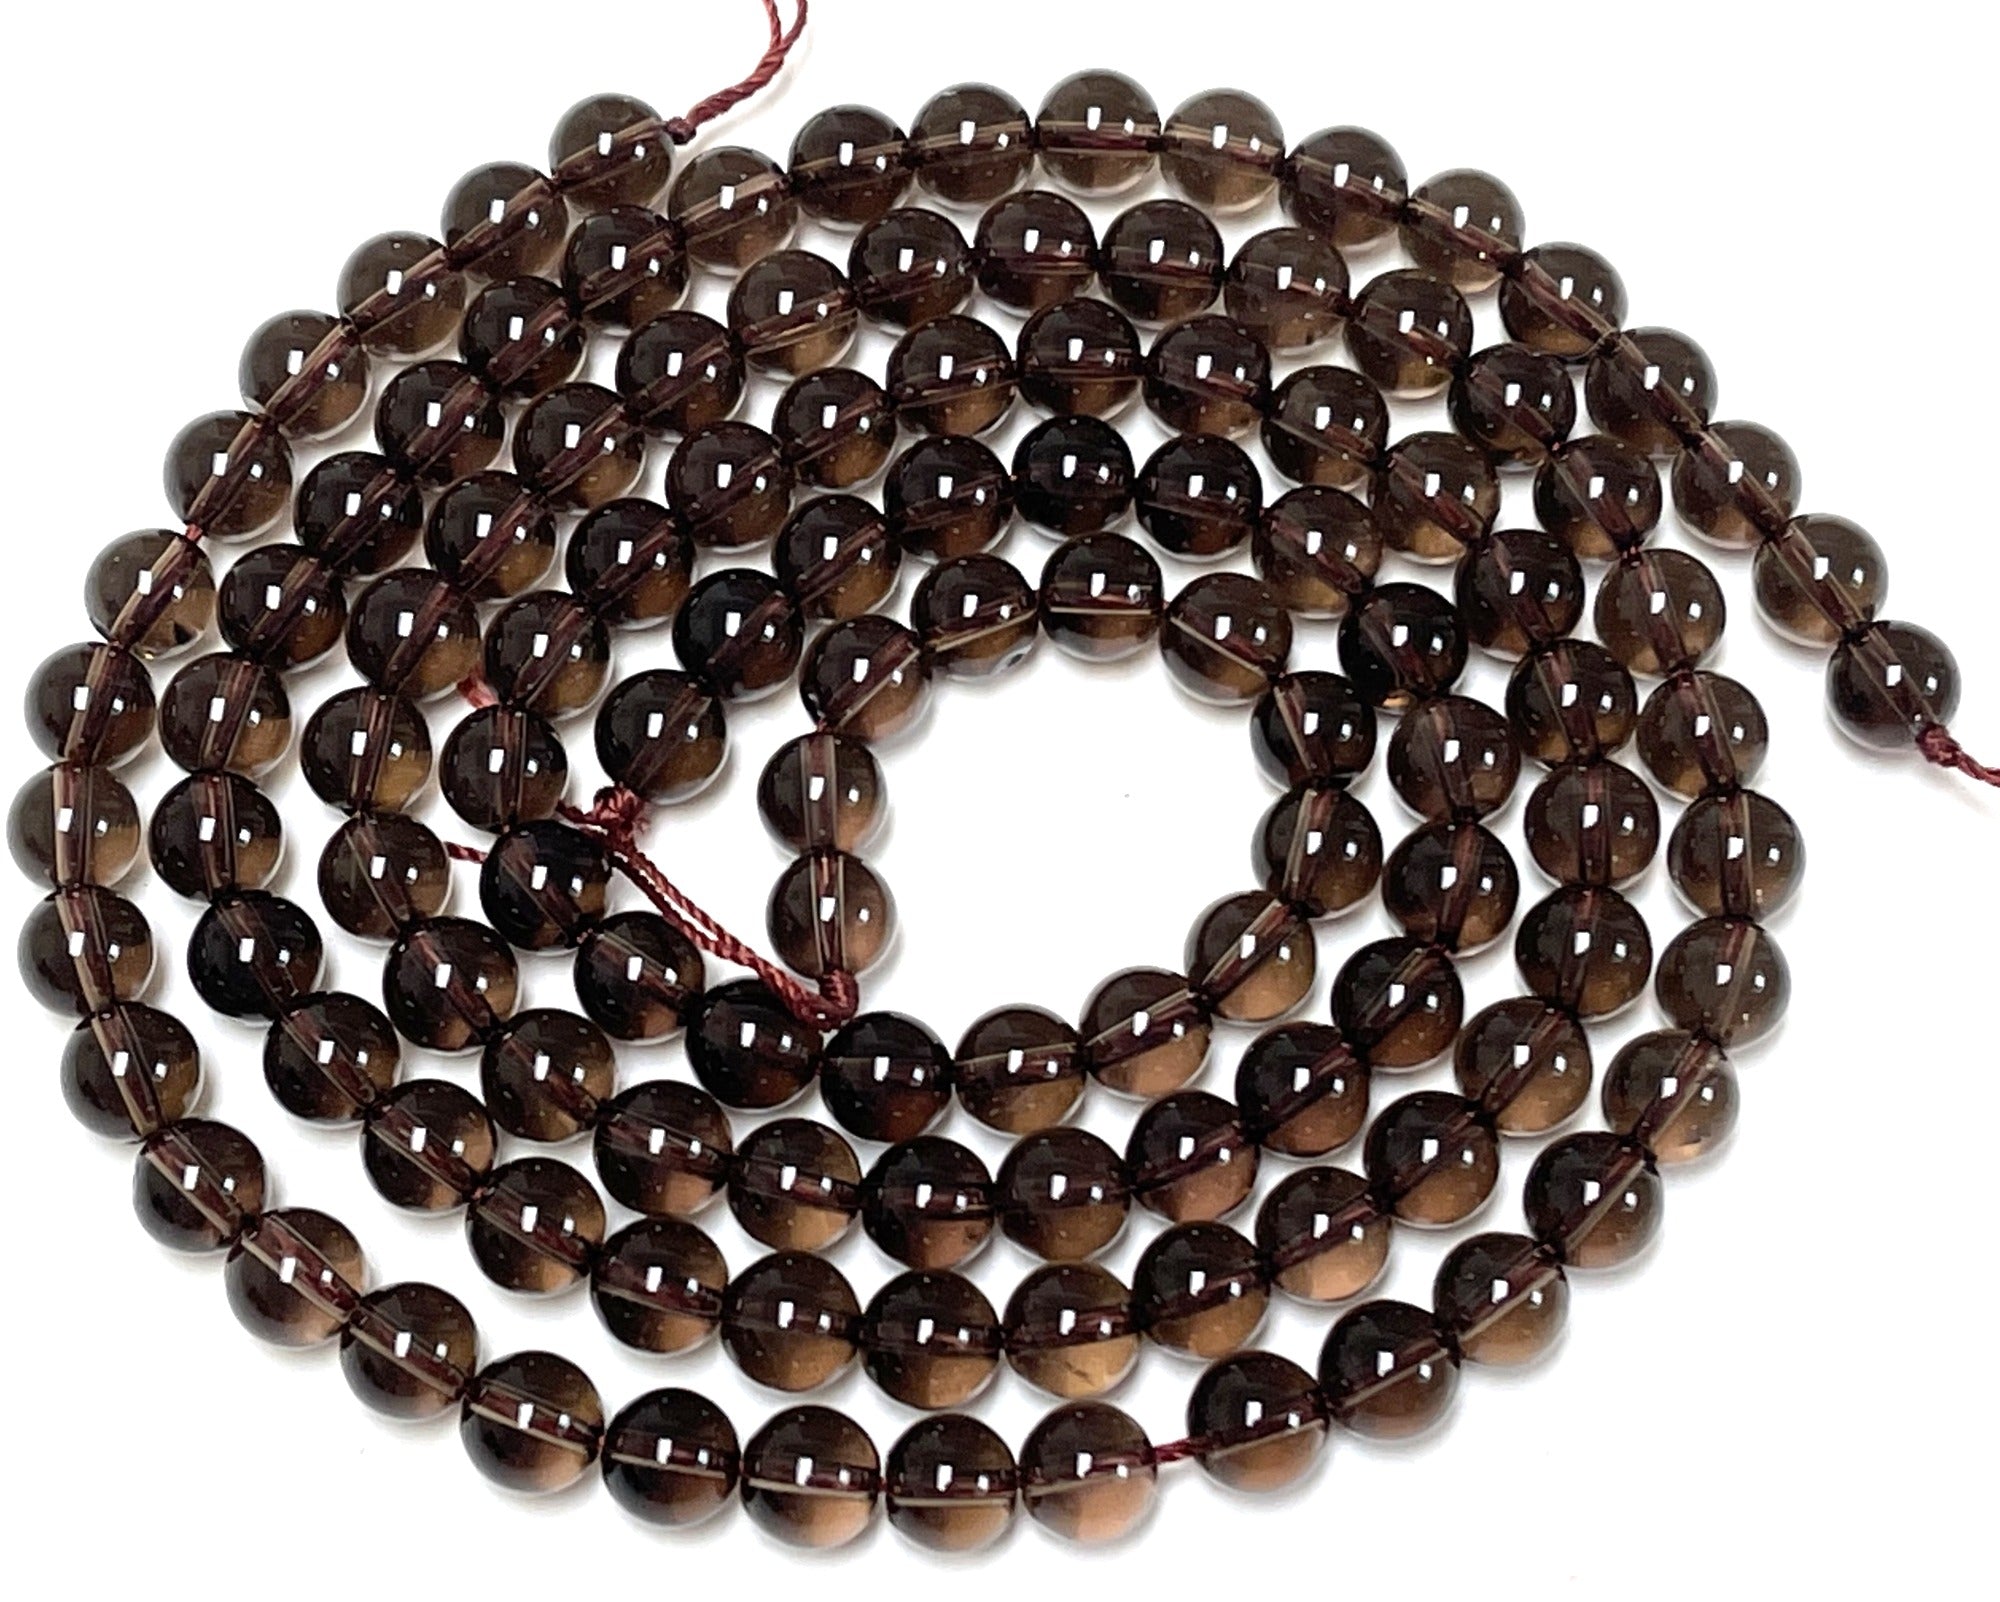 Smoky Quartz 6mm round gemstone beads 15.5" strand